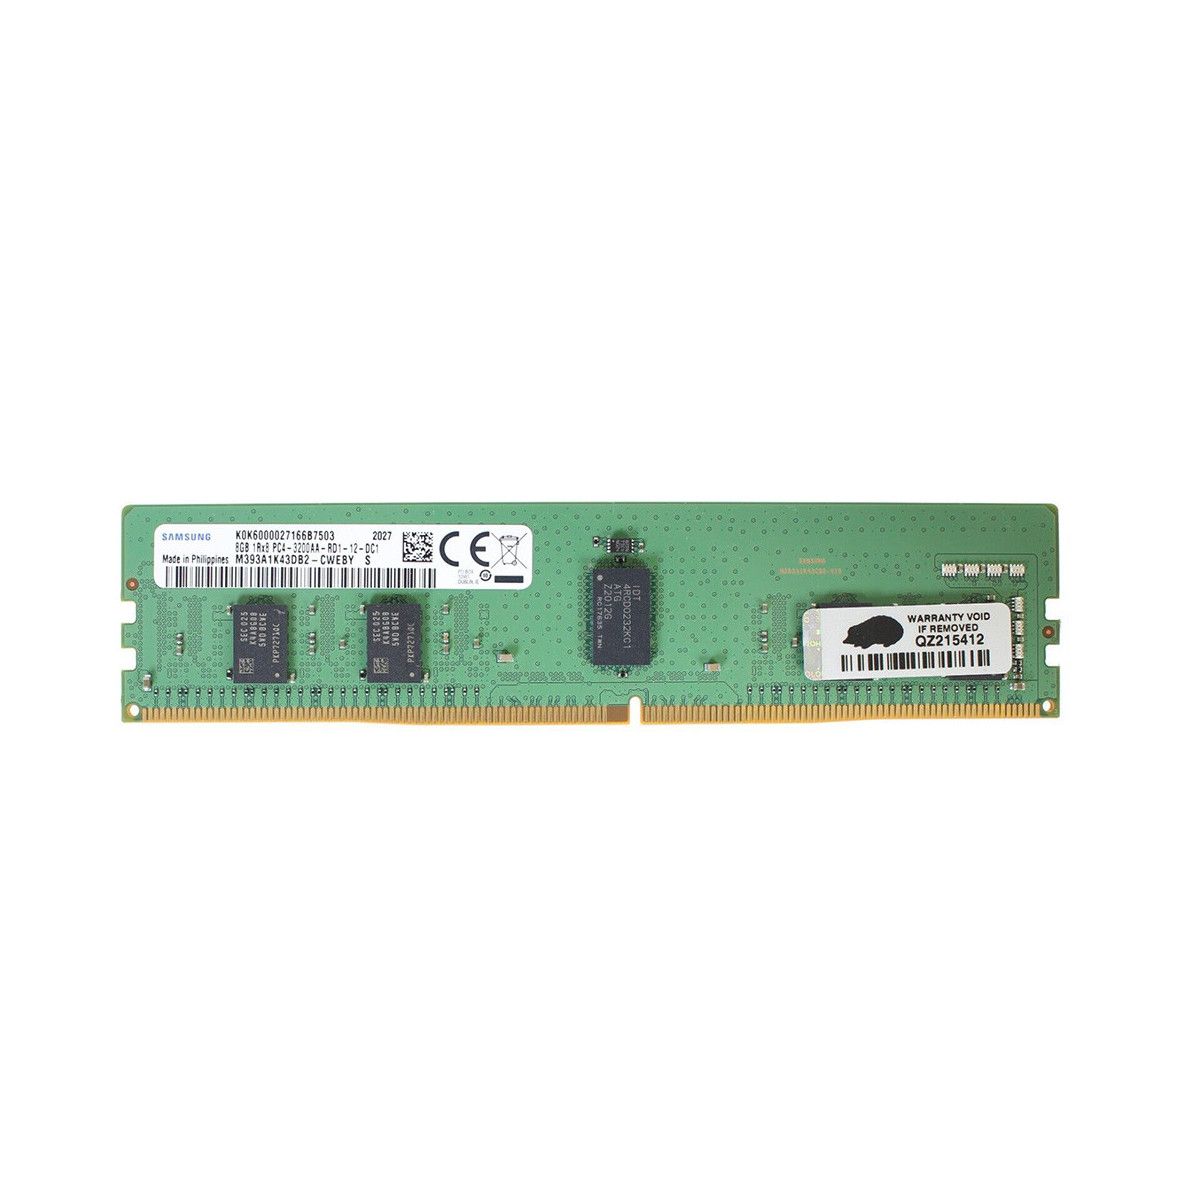 AA810825-MS - Memstar 1x 8GB DDR4-3200 RDIMM PC4-25600R - Mem-Star OEM compatibile Memoria 1 - Memstar 